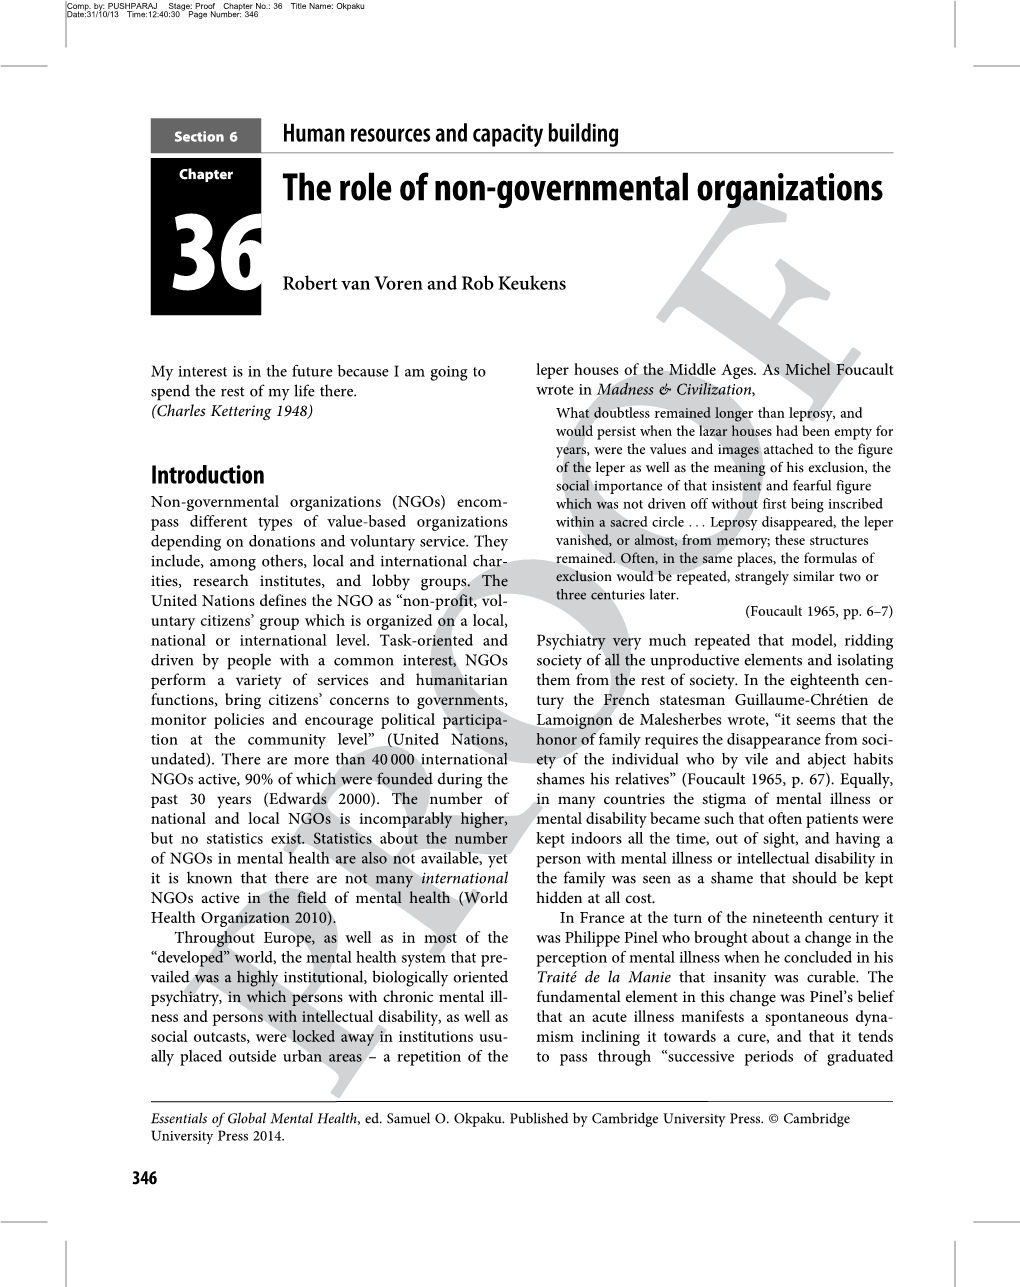 The Role of Non-Governmental Organizations